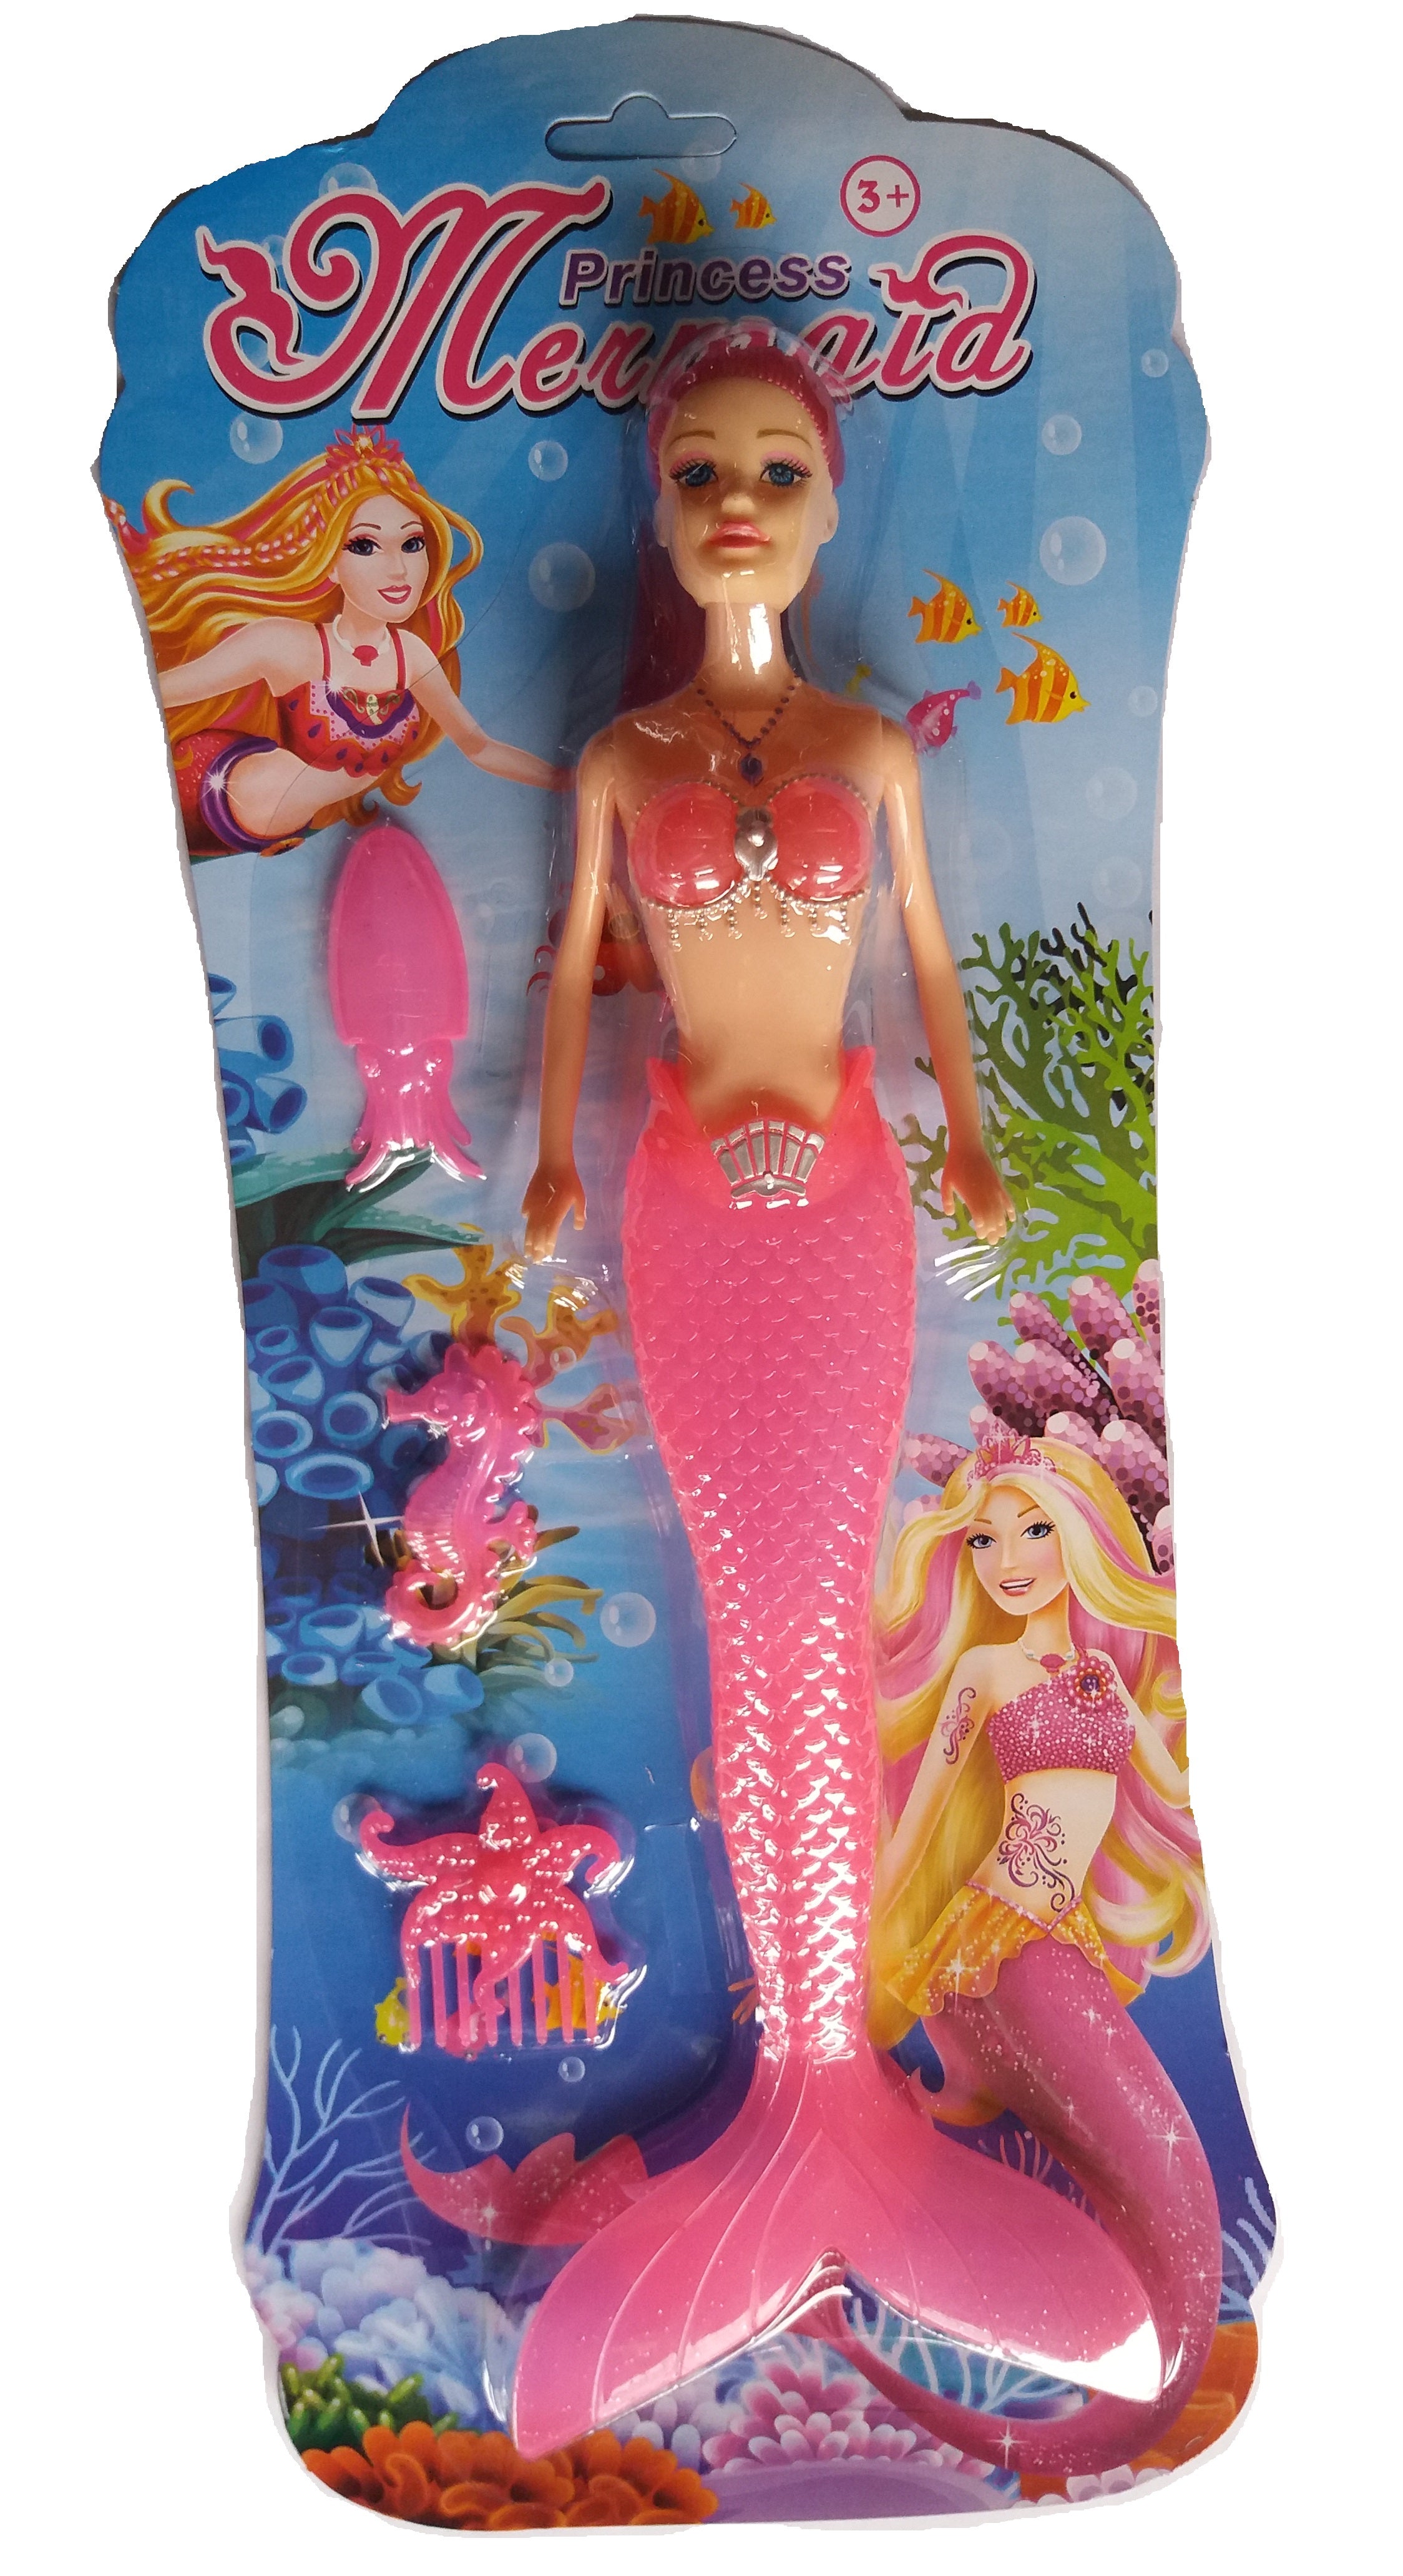 Mermaid Princess Playset